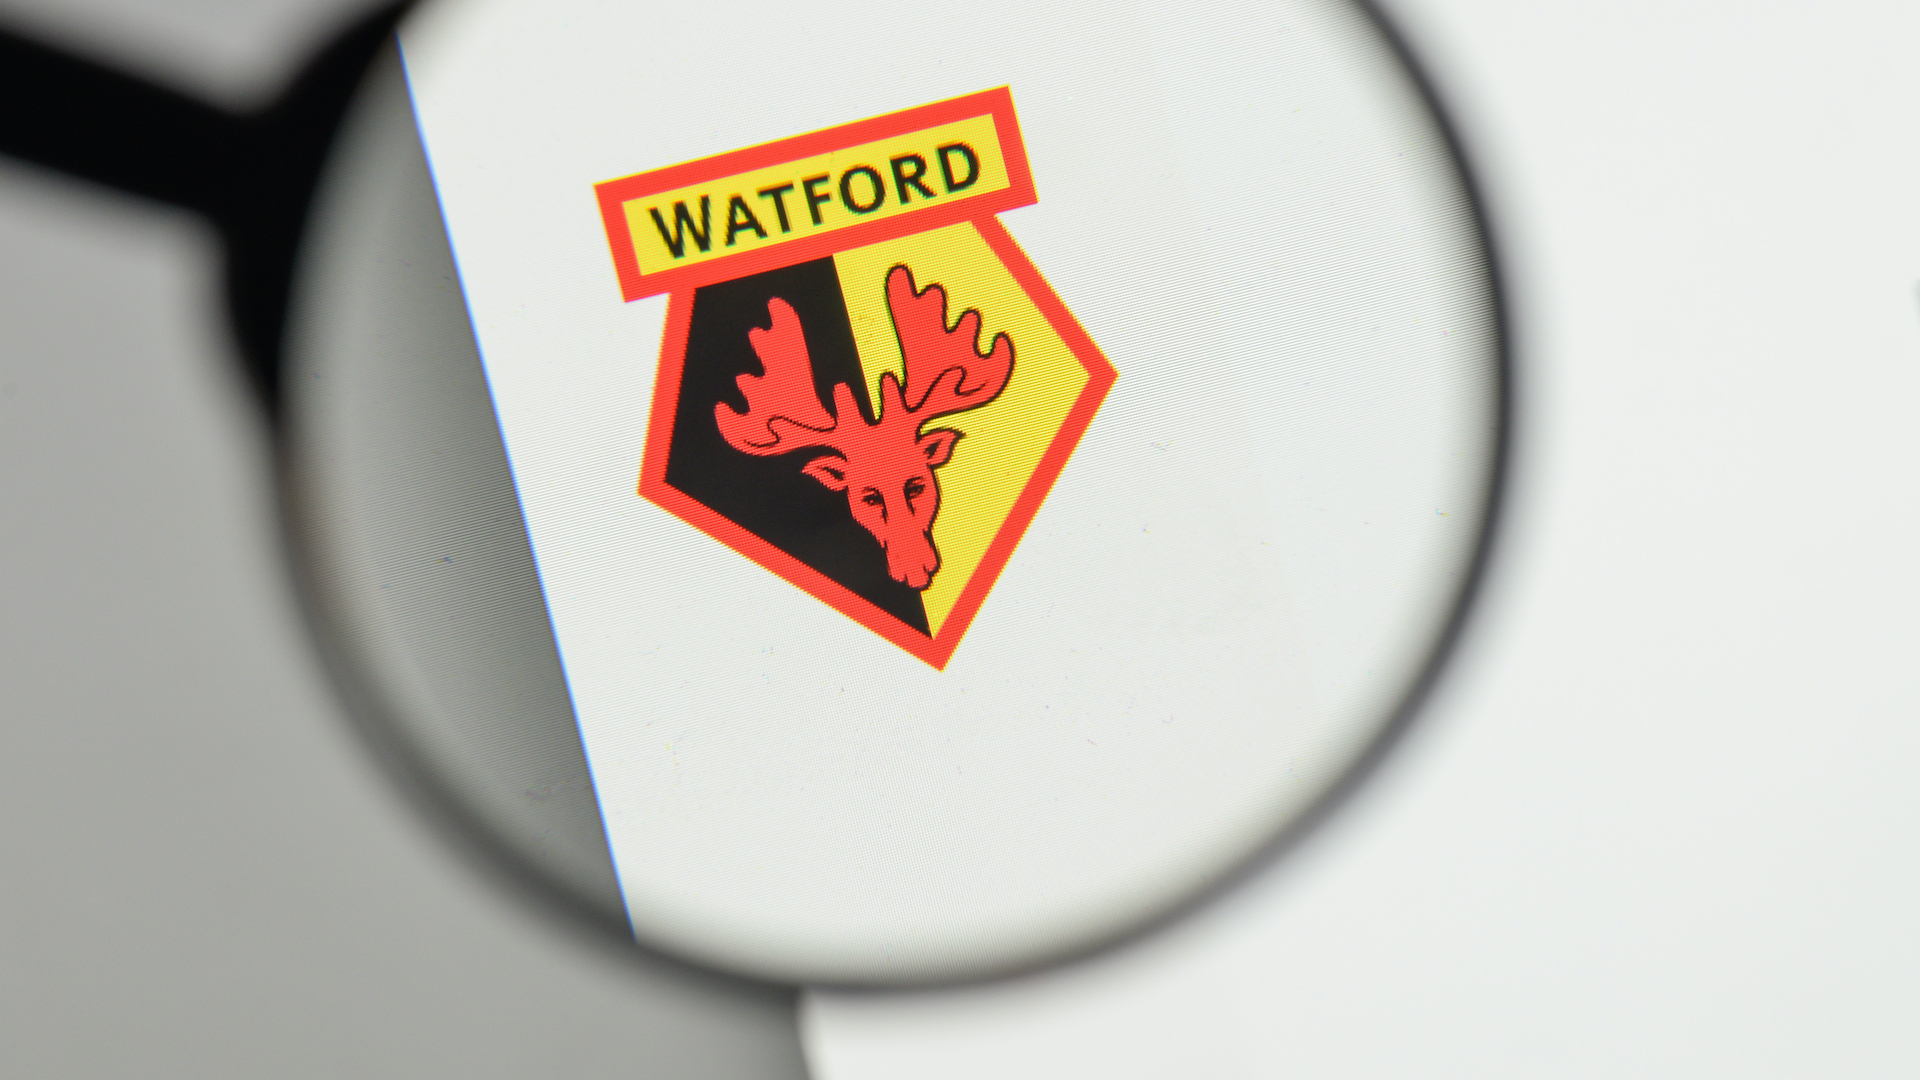 Watford's club badge